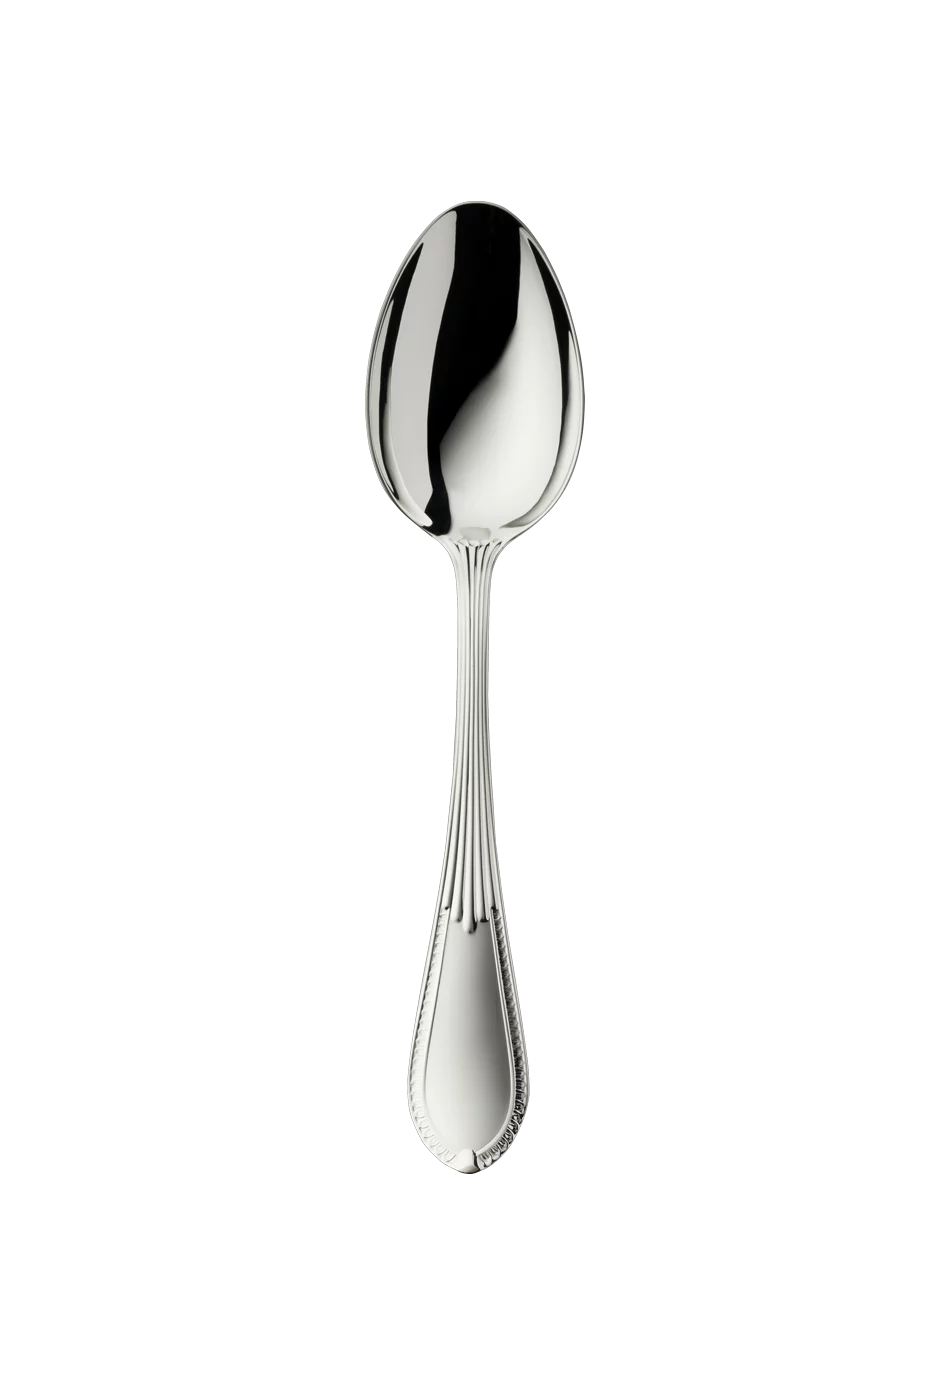 Belvedere Menu Spoon (925 Sterling Silver)